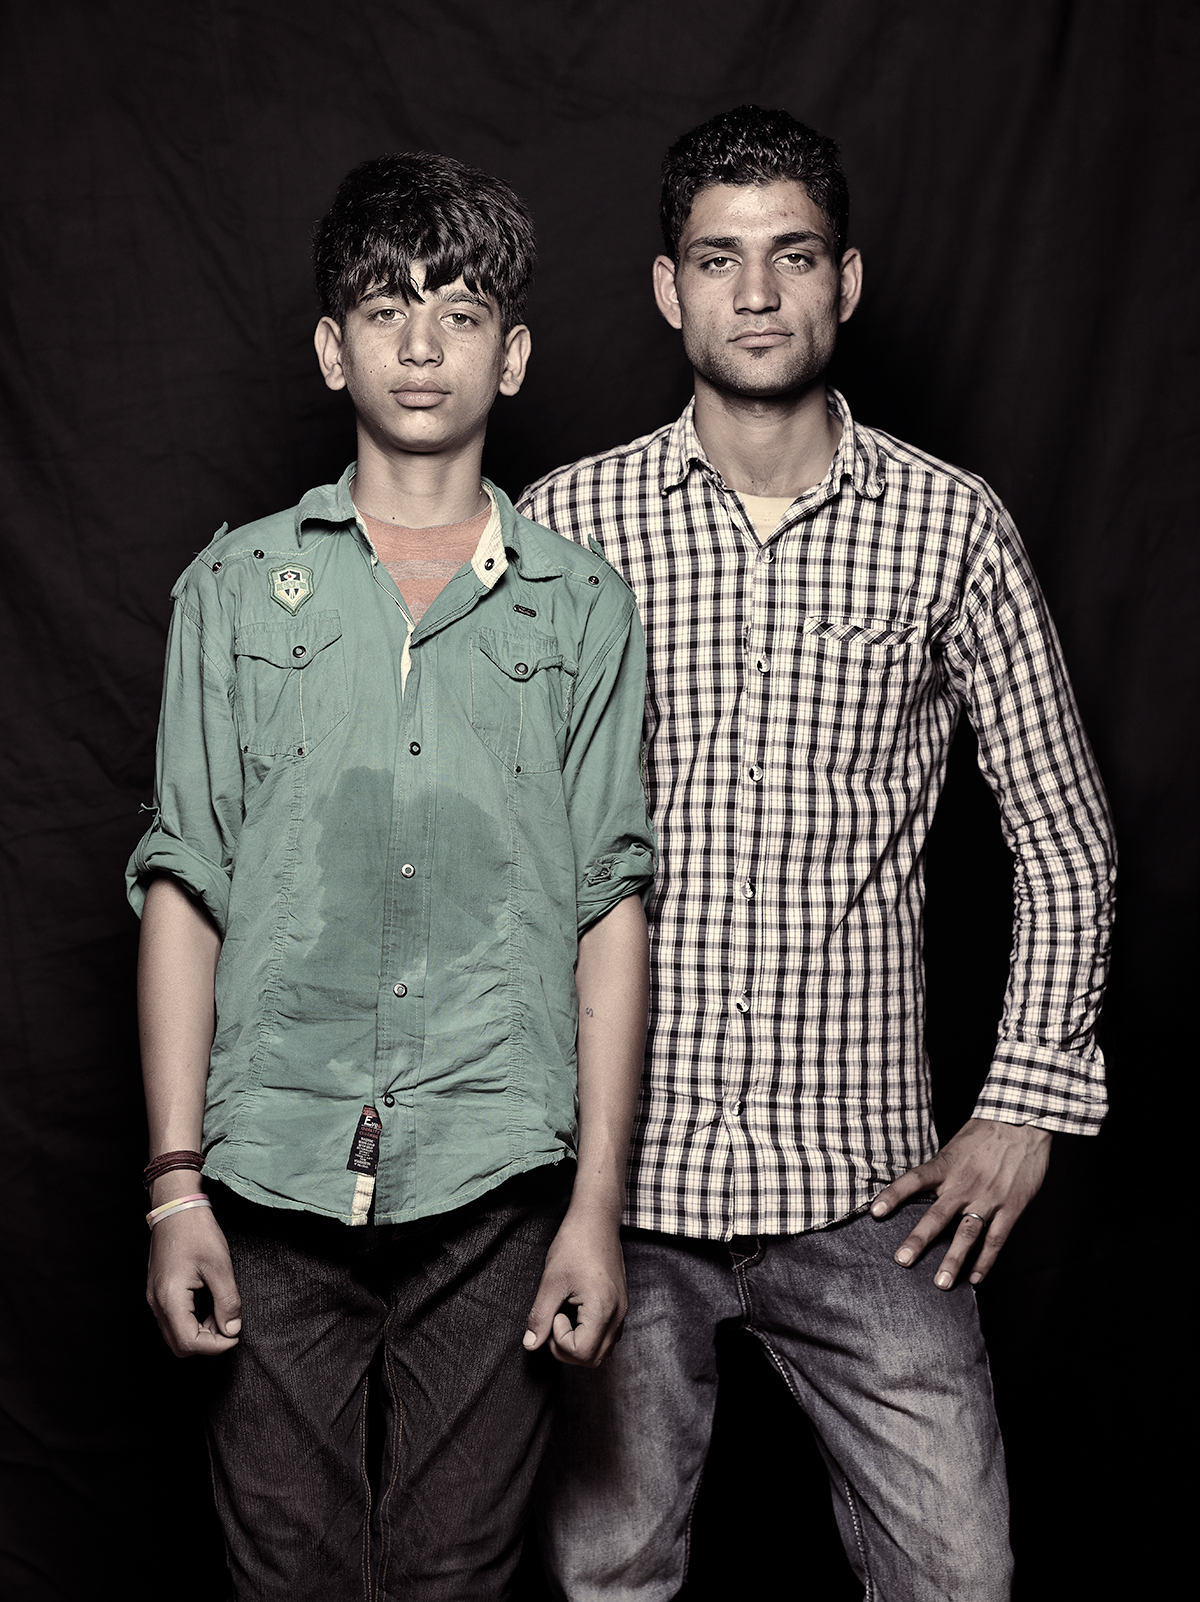 Omar Shah, 14 and Sunil Bhutt, 21, D-camp, 2013